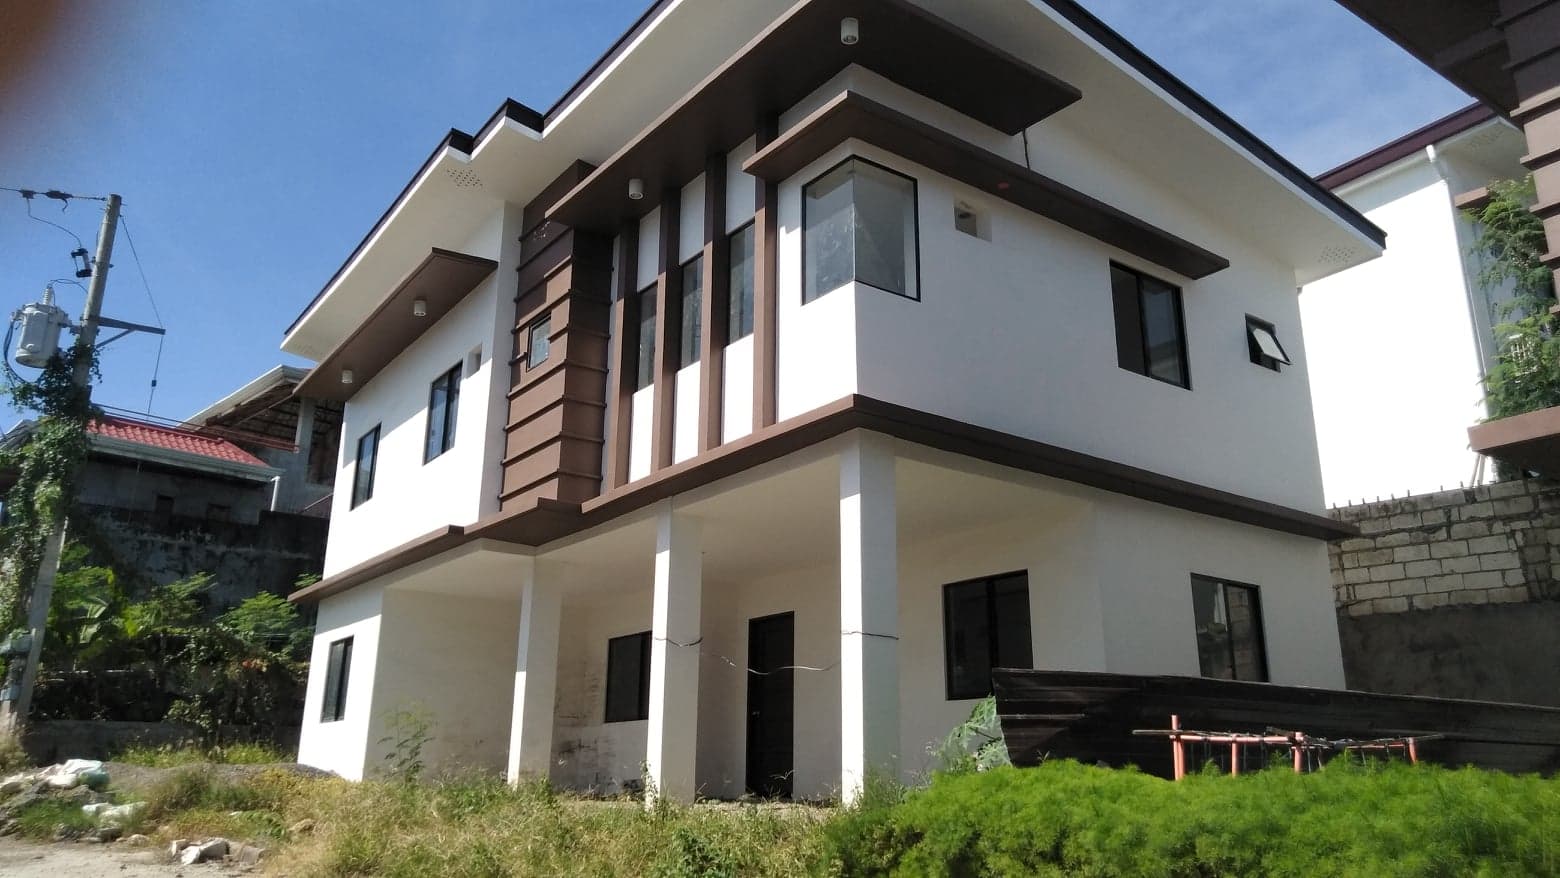 Sold! Brandnew House For Sale 5 Bedroom in Mandaue City Cebu